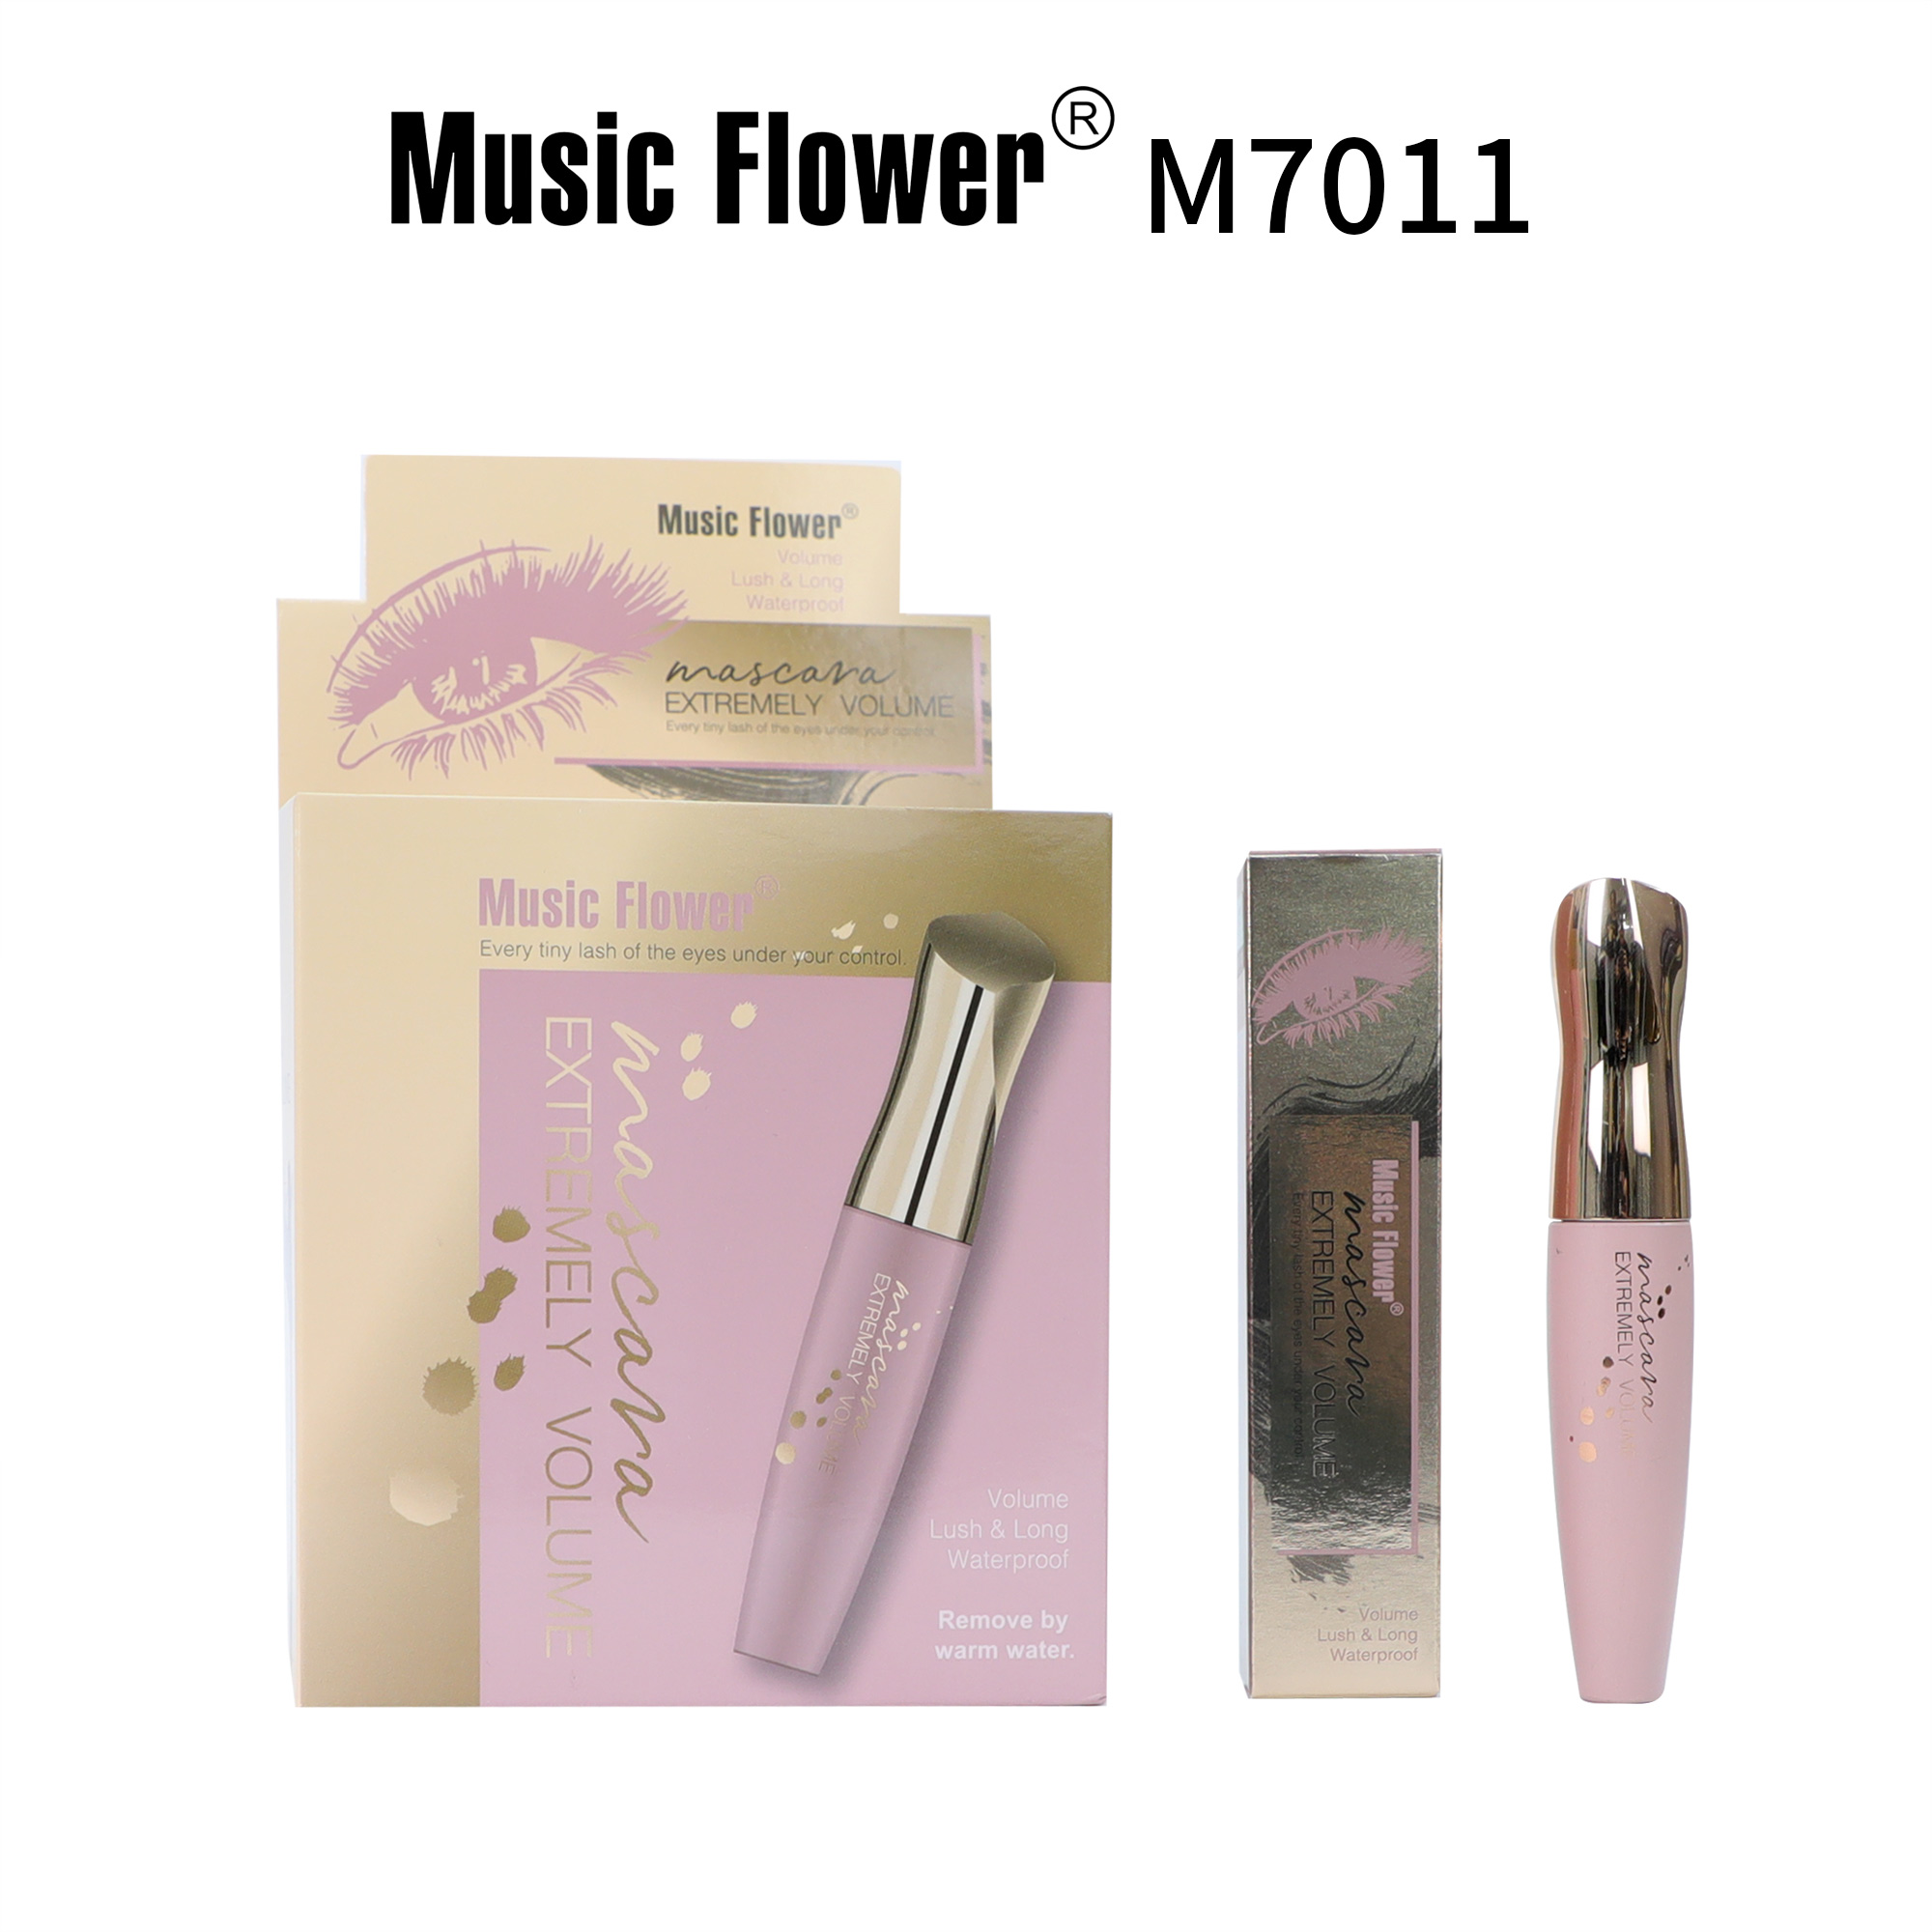 MUSIC FLOWER MASCARA M7011